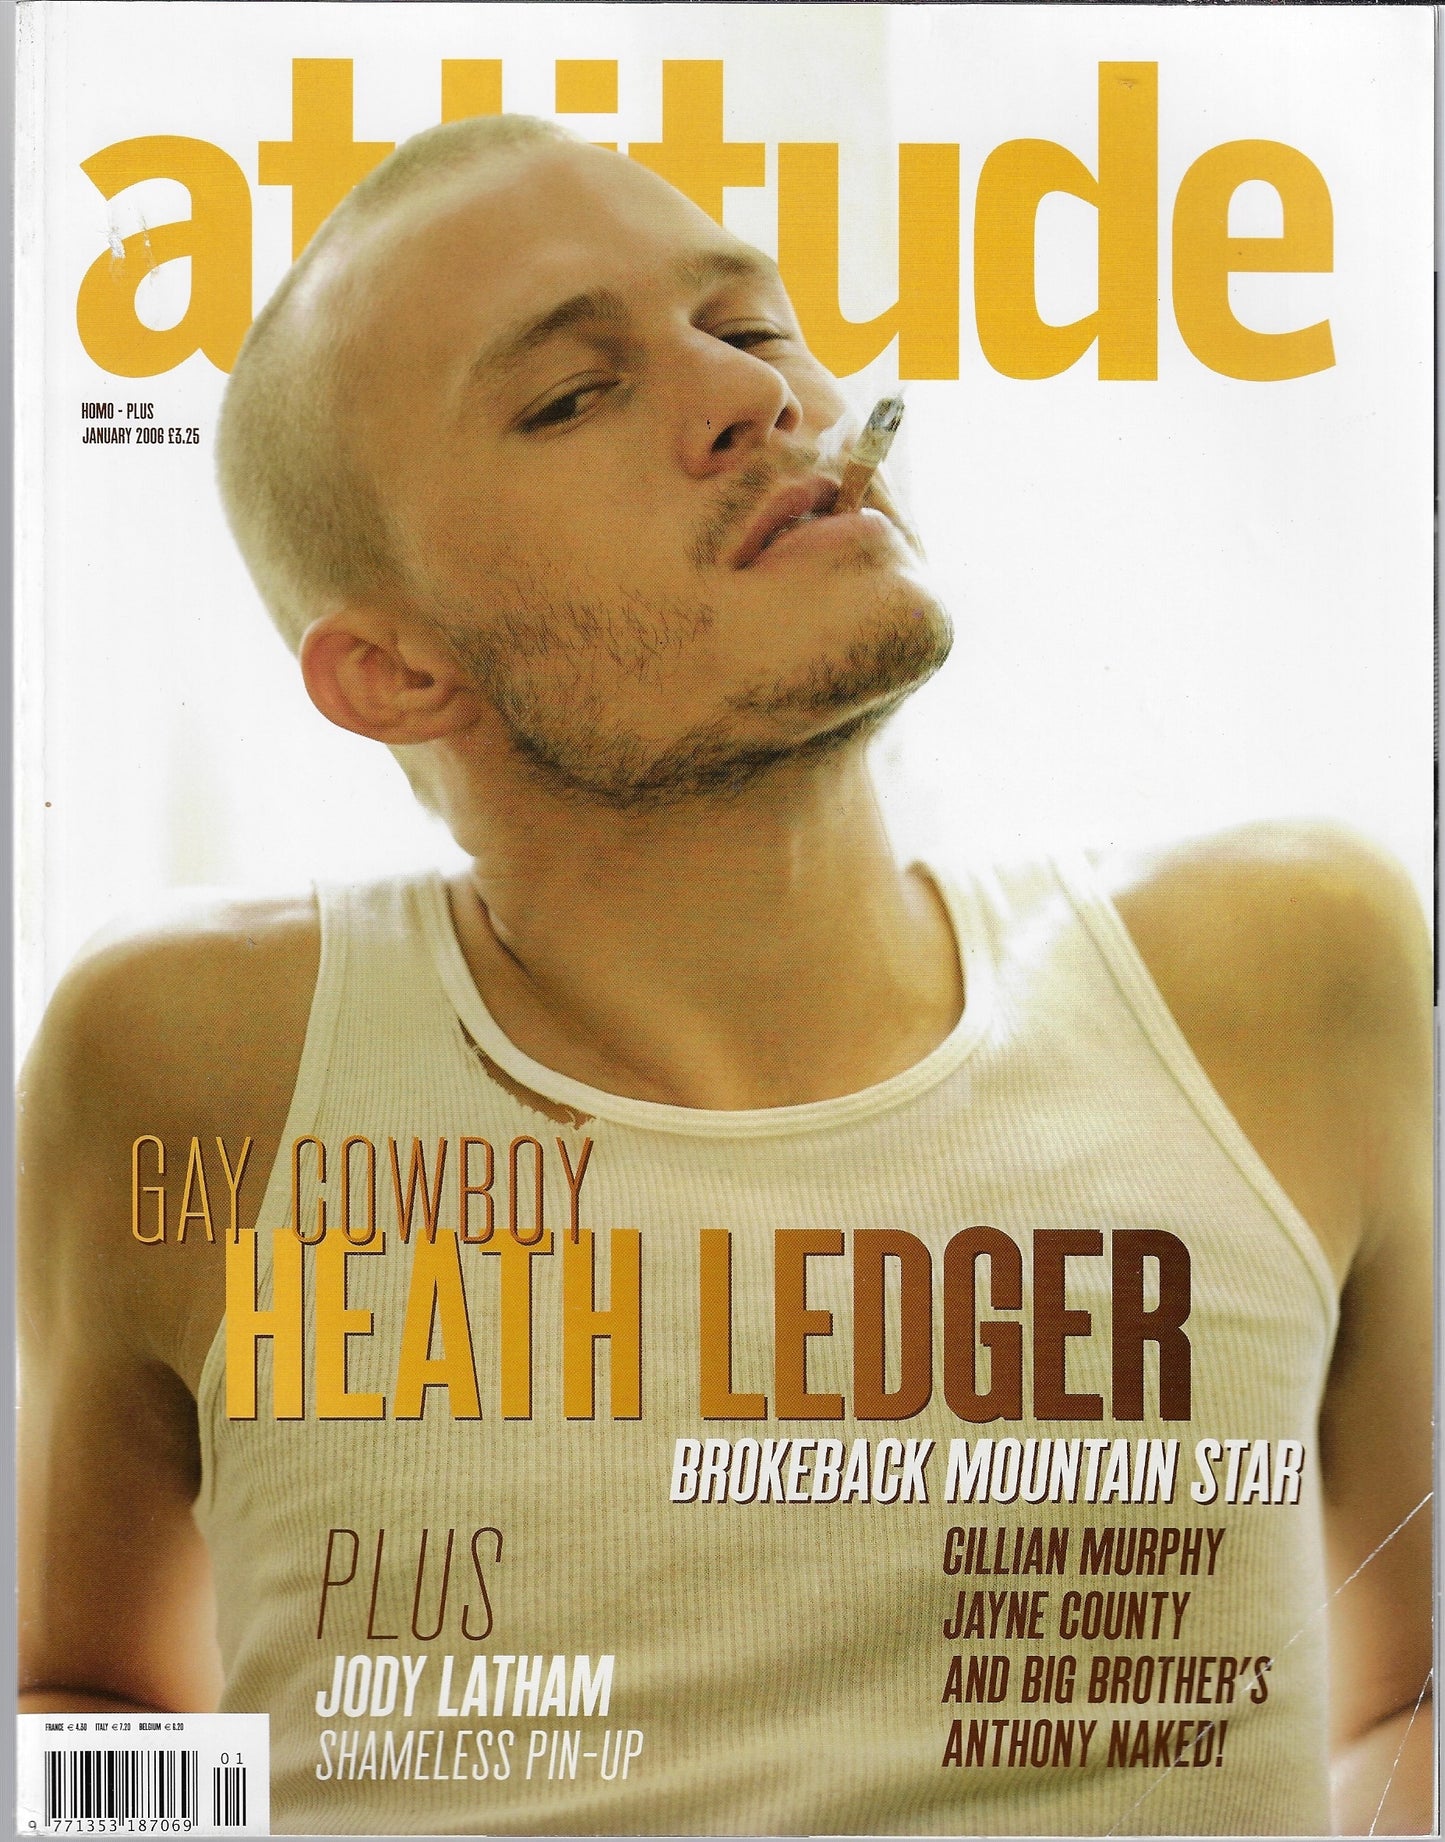 Attitude Magazine 141 - Heath Ledger